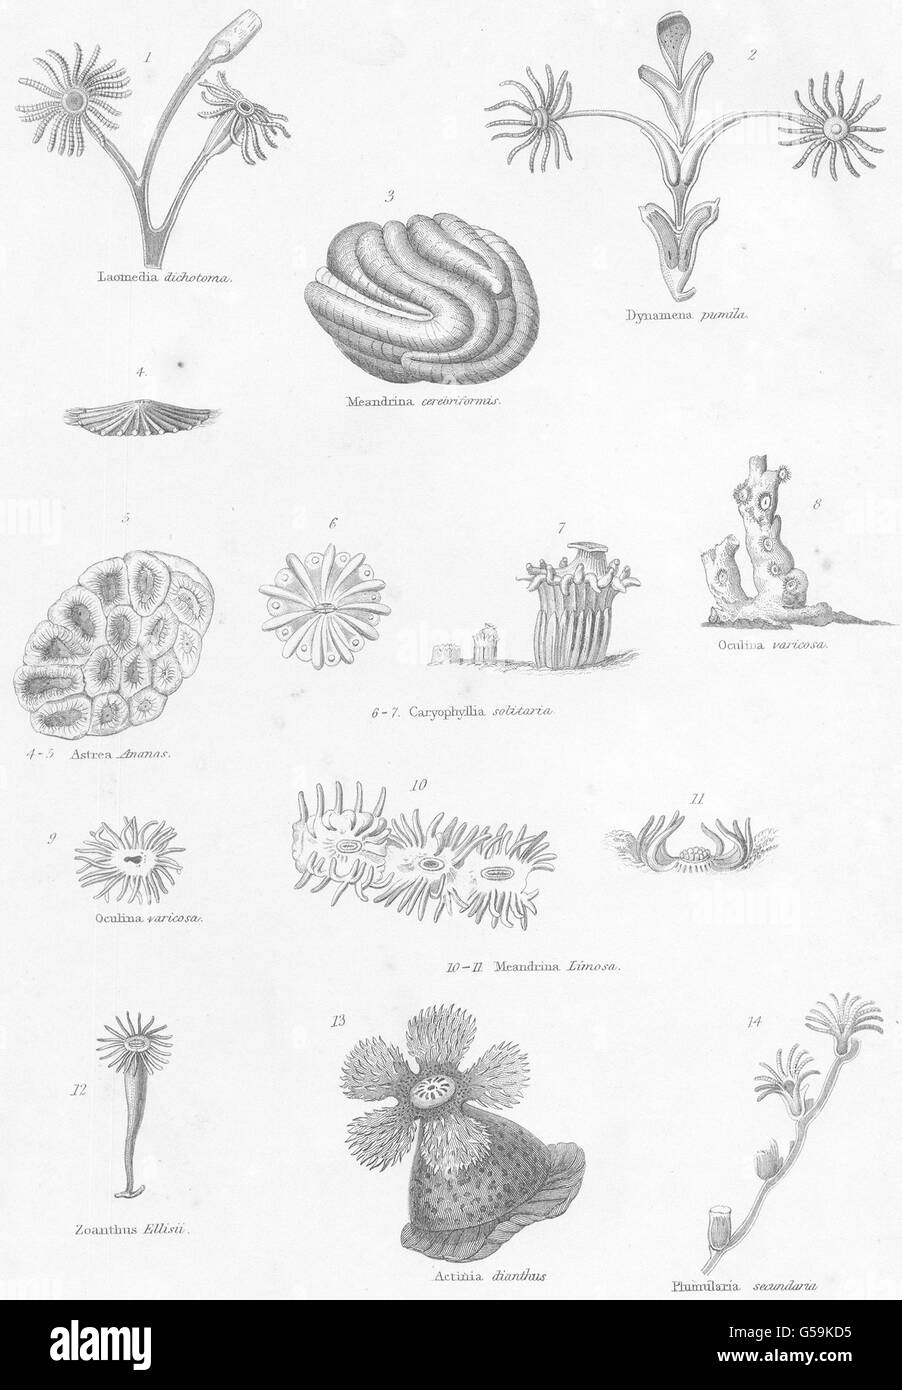 POLYPS: Laomedia dichotoma; Dynamena pumila; Meandrina cerebriformis, 1860 Stock Photo